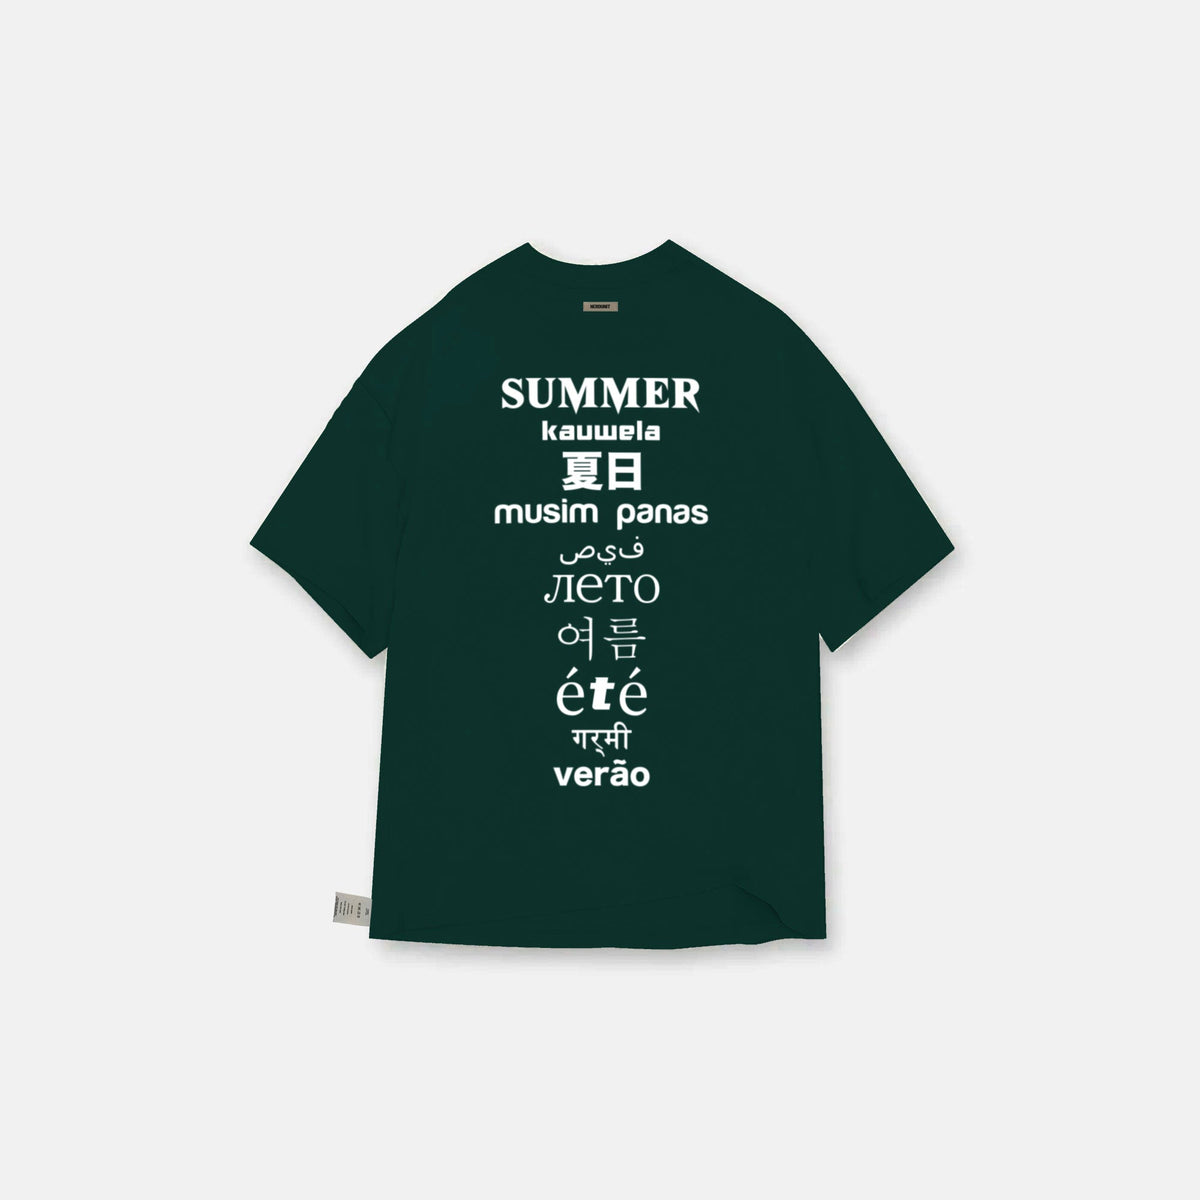 SB Translation Tshirt | Dark Green